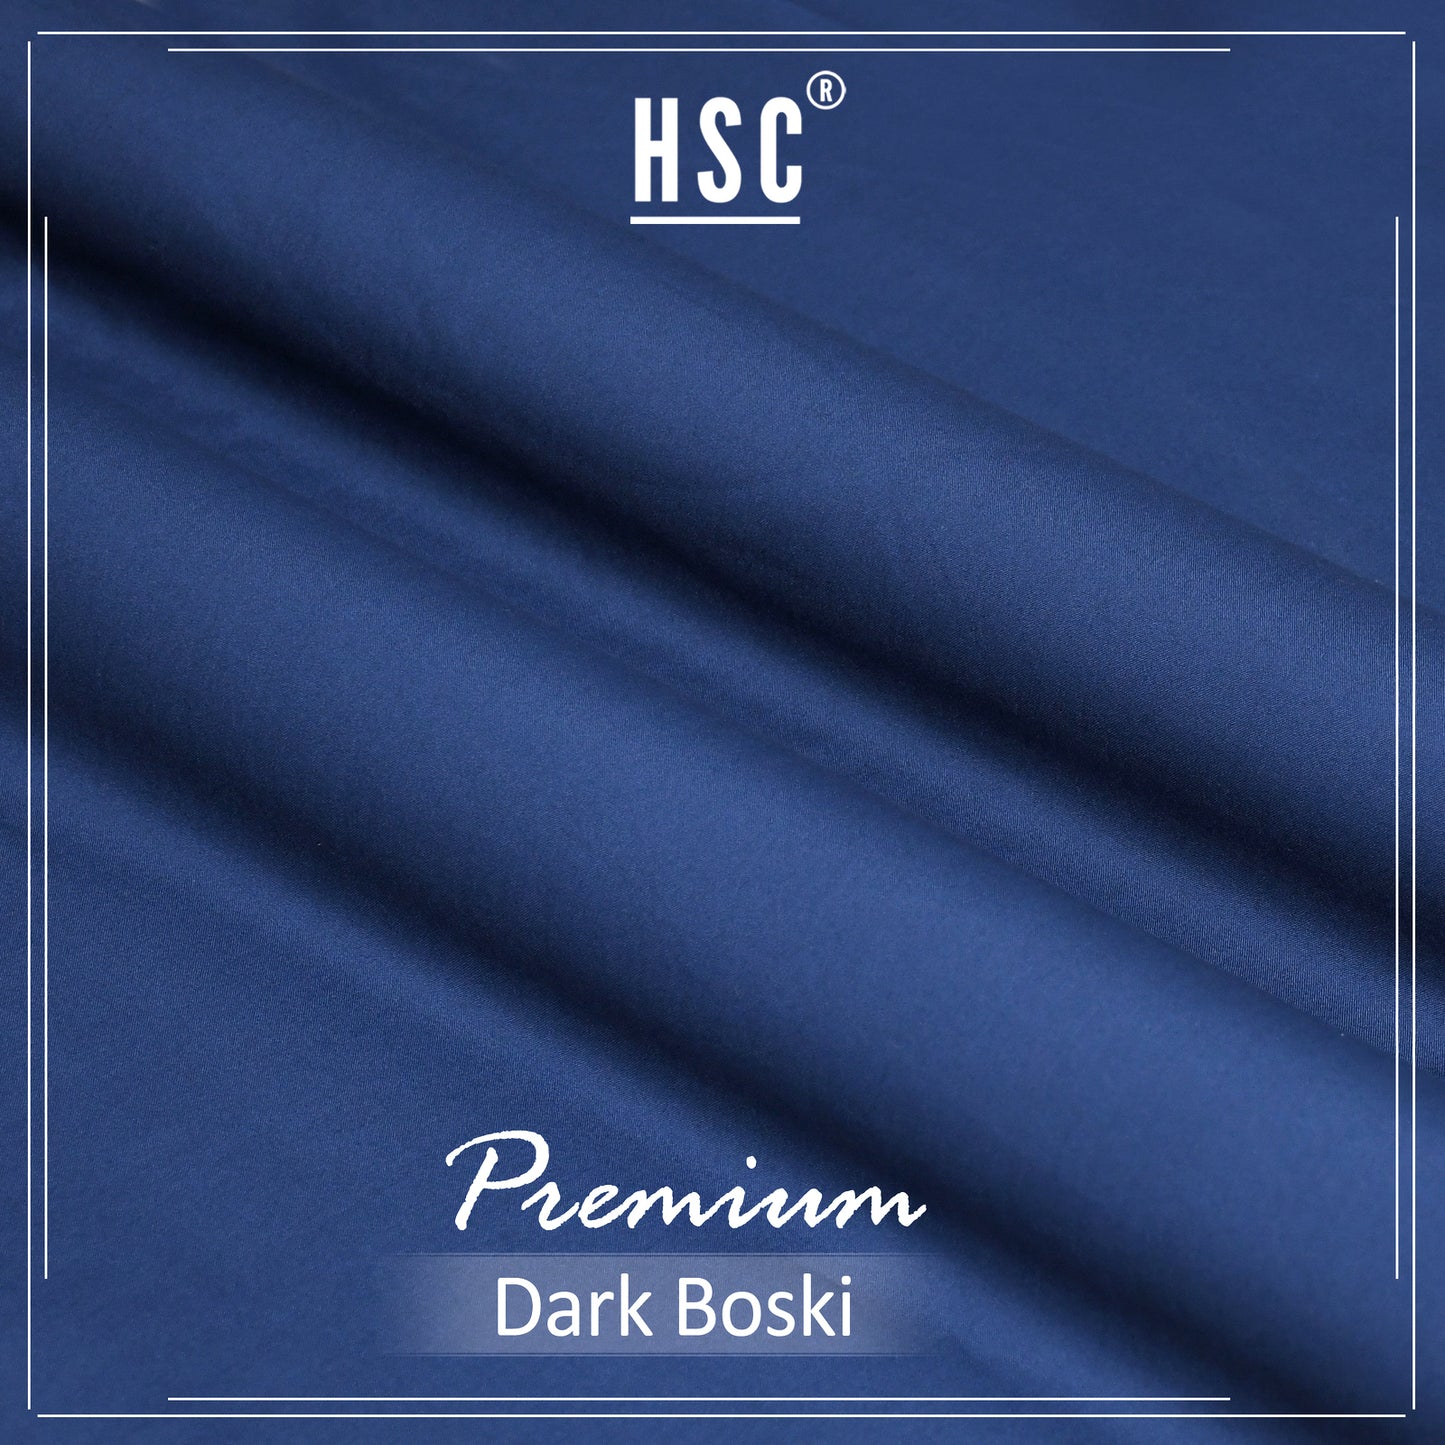 Buy1 Get 1 Free Premium Dark Boski For Men - PDB7 HSC